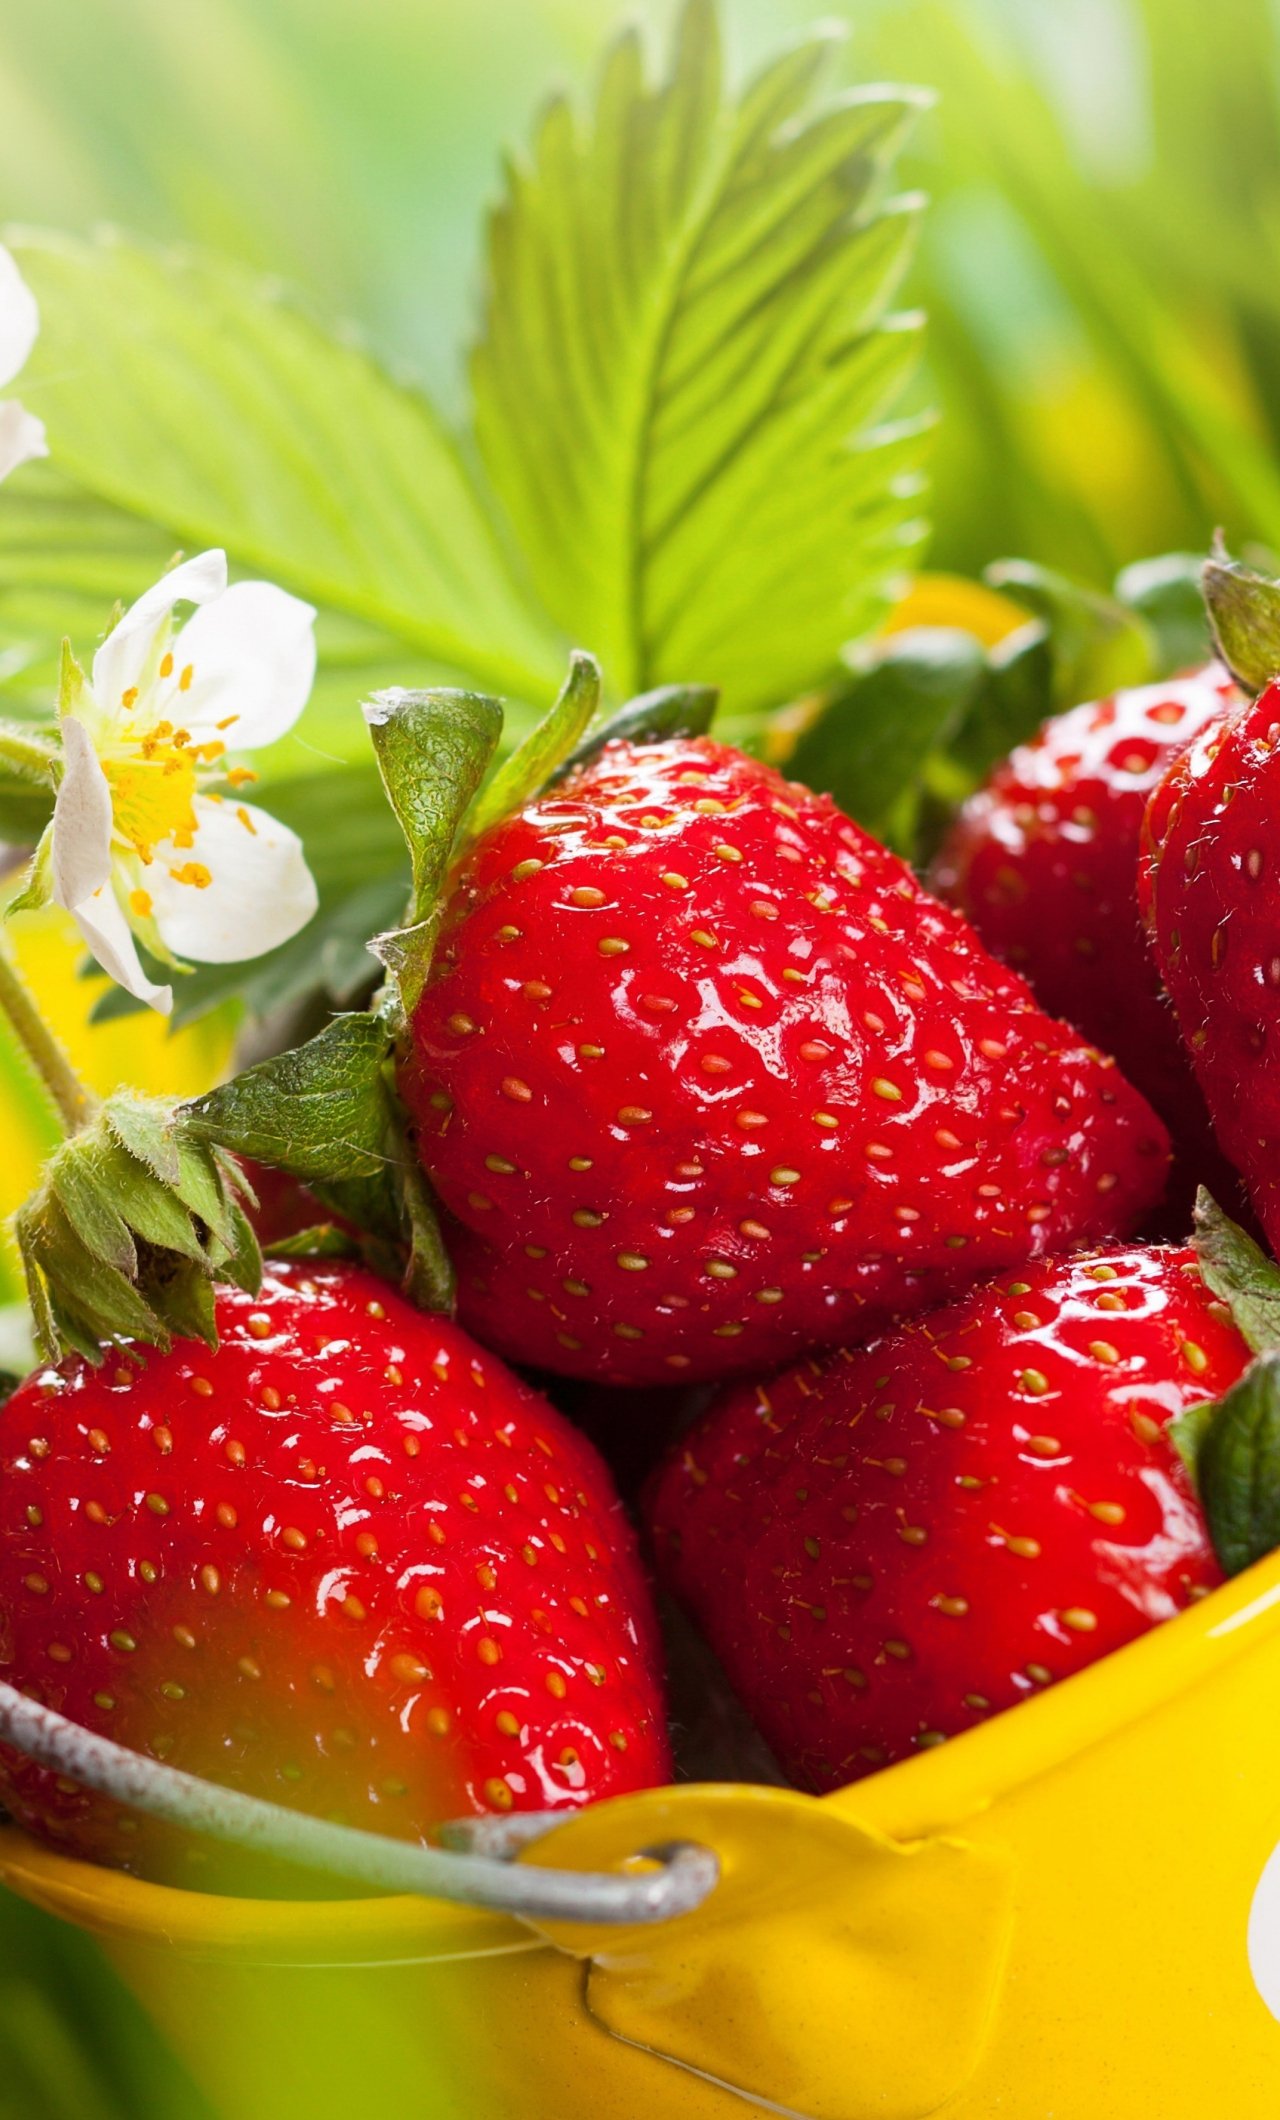 Download wallpaper 1280x2120 strawberries, basket, fresh fruits, iphone 6 plus, 1280x2120 HD background, 5260